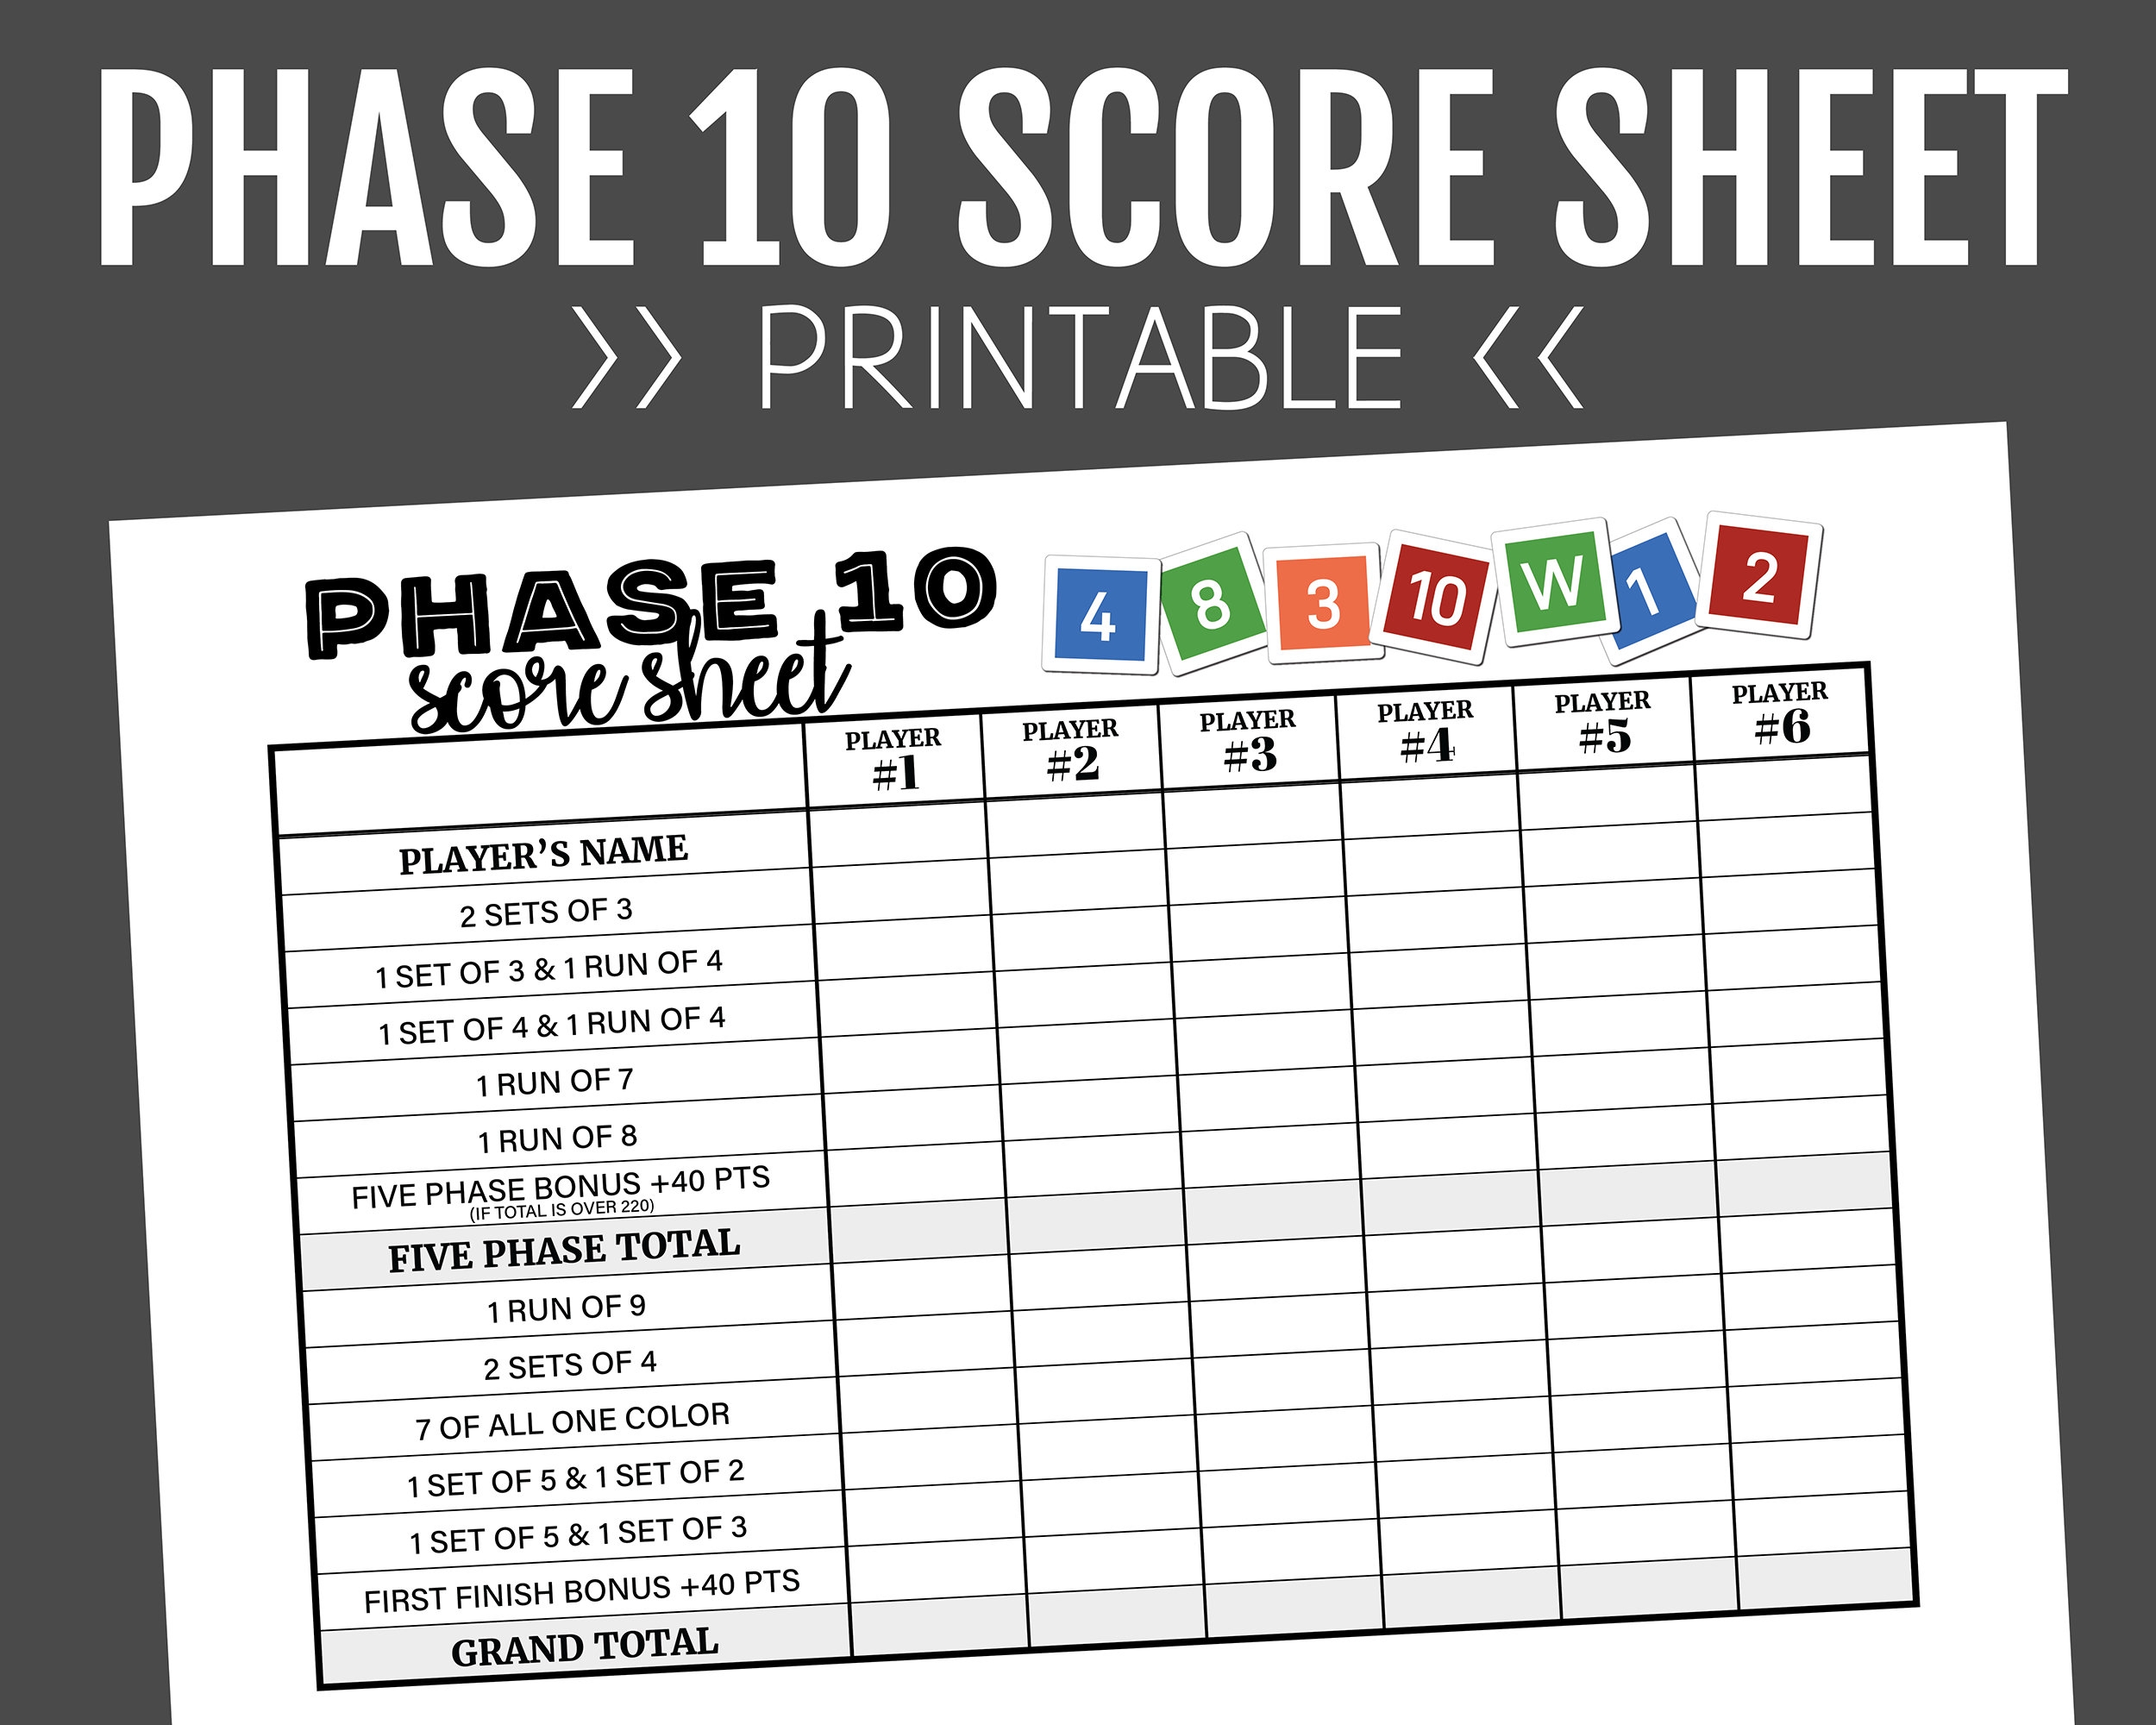 Phase 10 Score Sheet Printable Score Sheet Digital Instant Download Phase 10 Printable File PDF 8 5 X 11 A4 Etsy